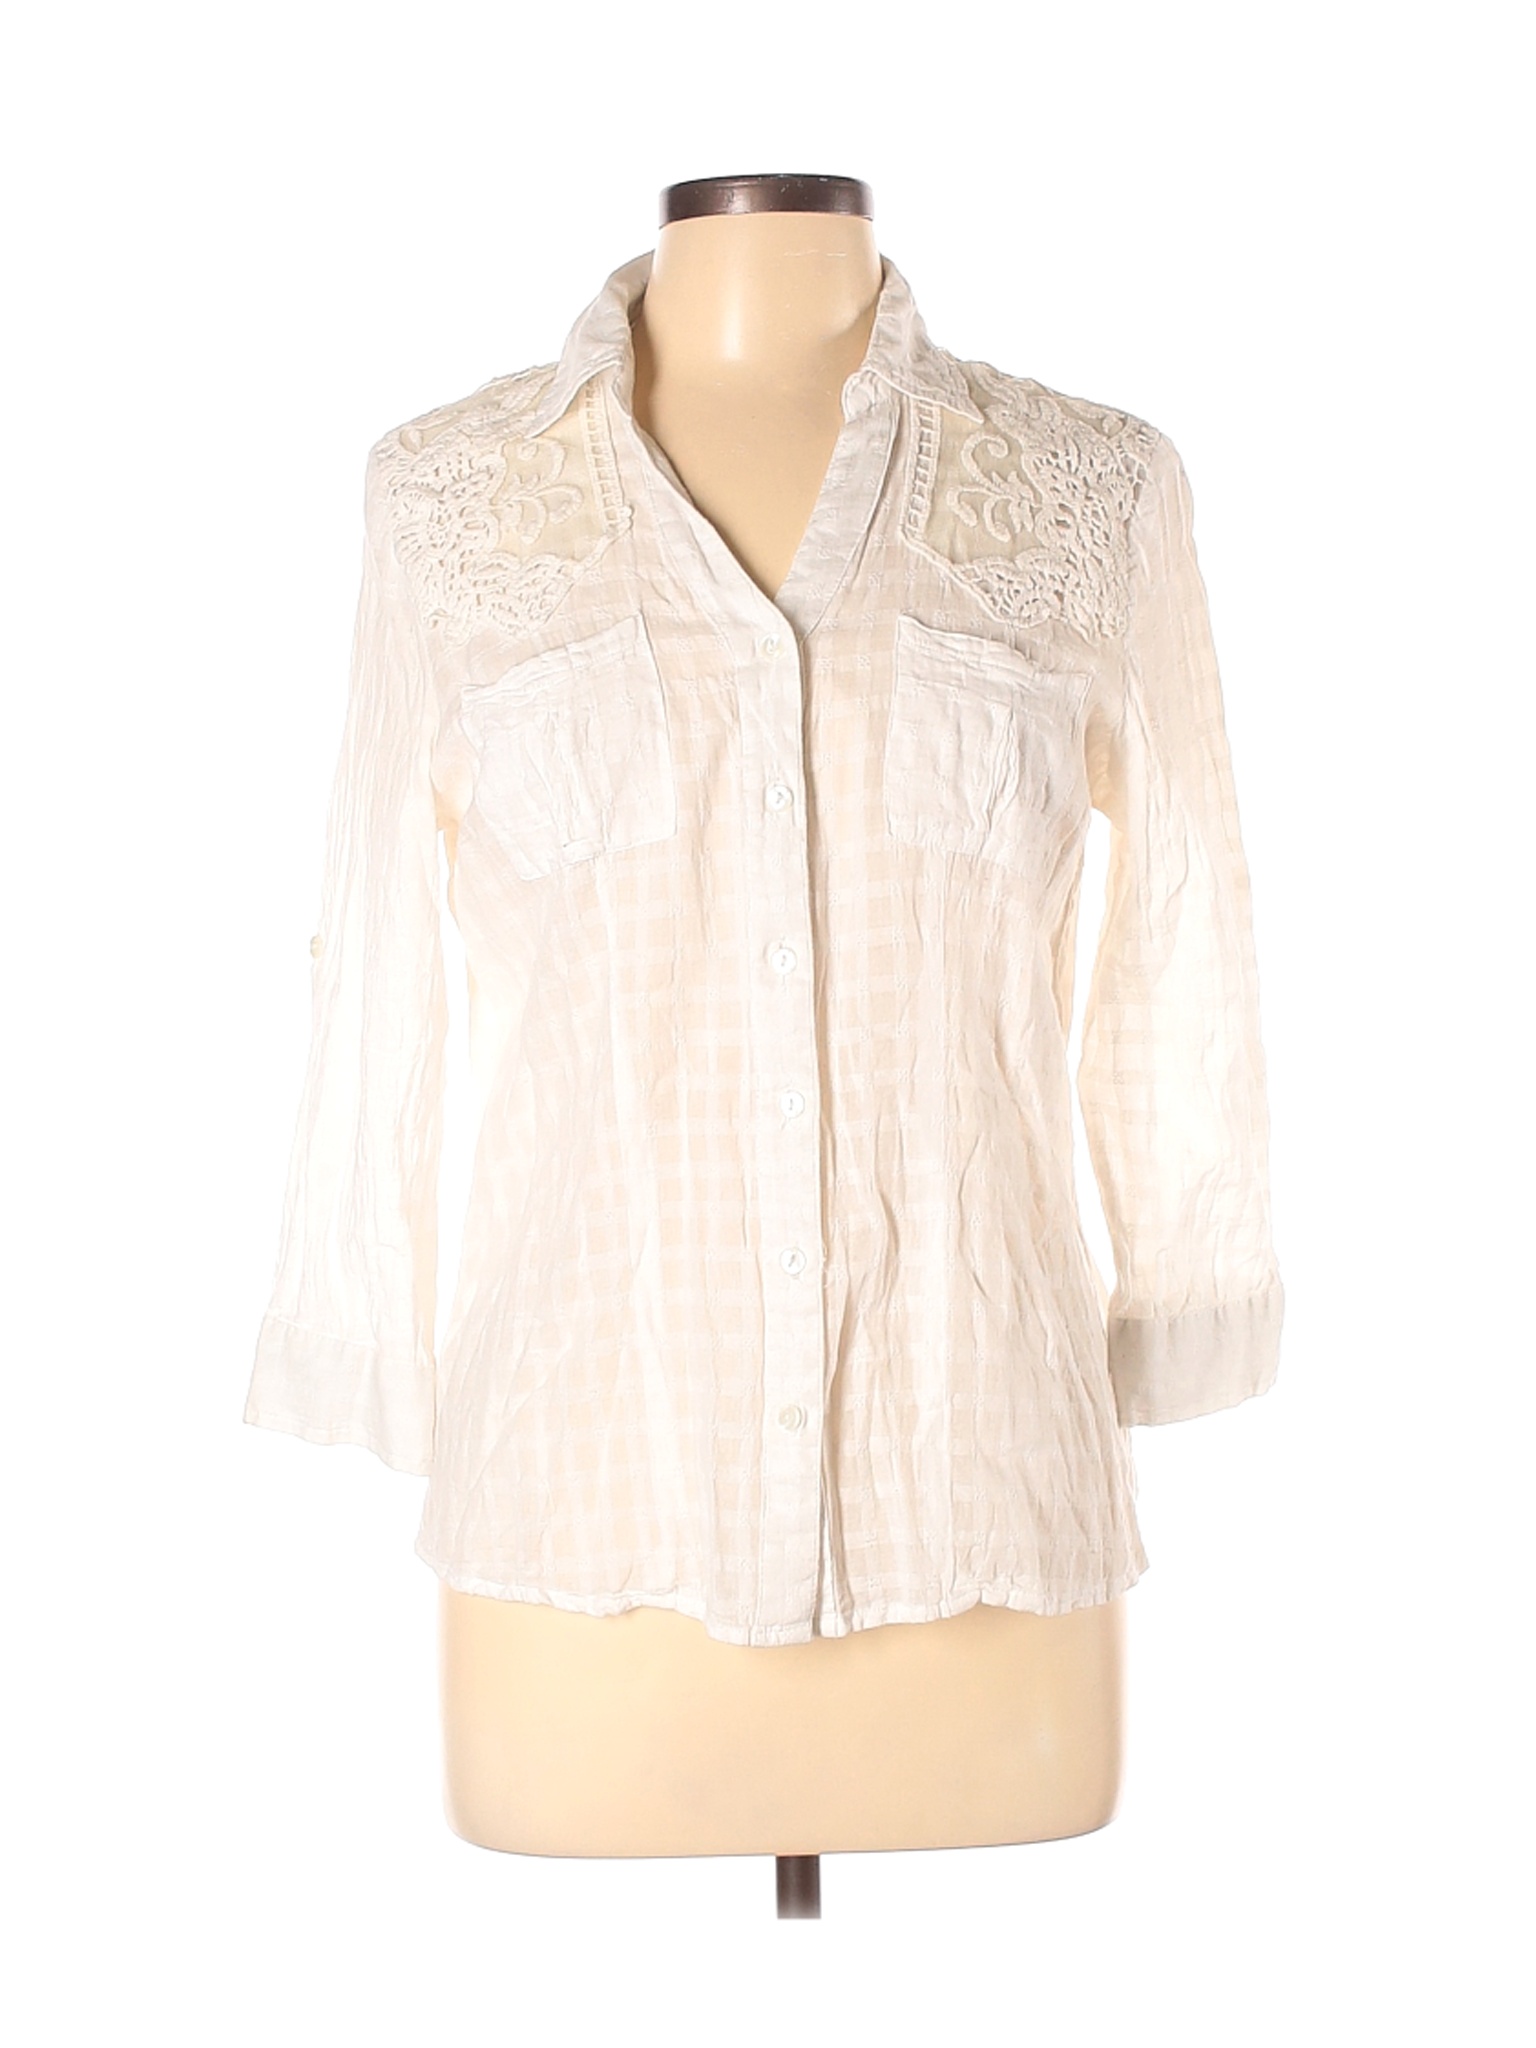 Eden & Olivia Women Ivory 3/4 Sleeve Button-Down Shirt L Petites | eBay